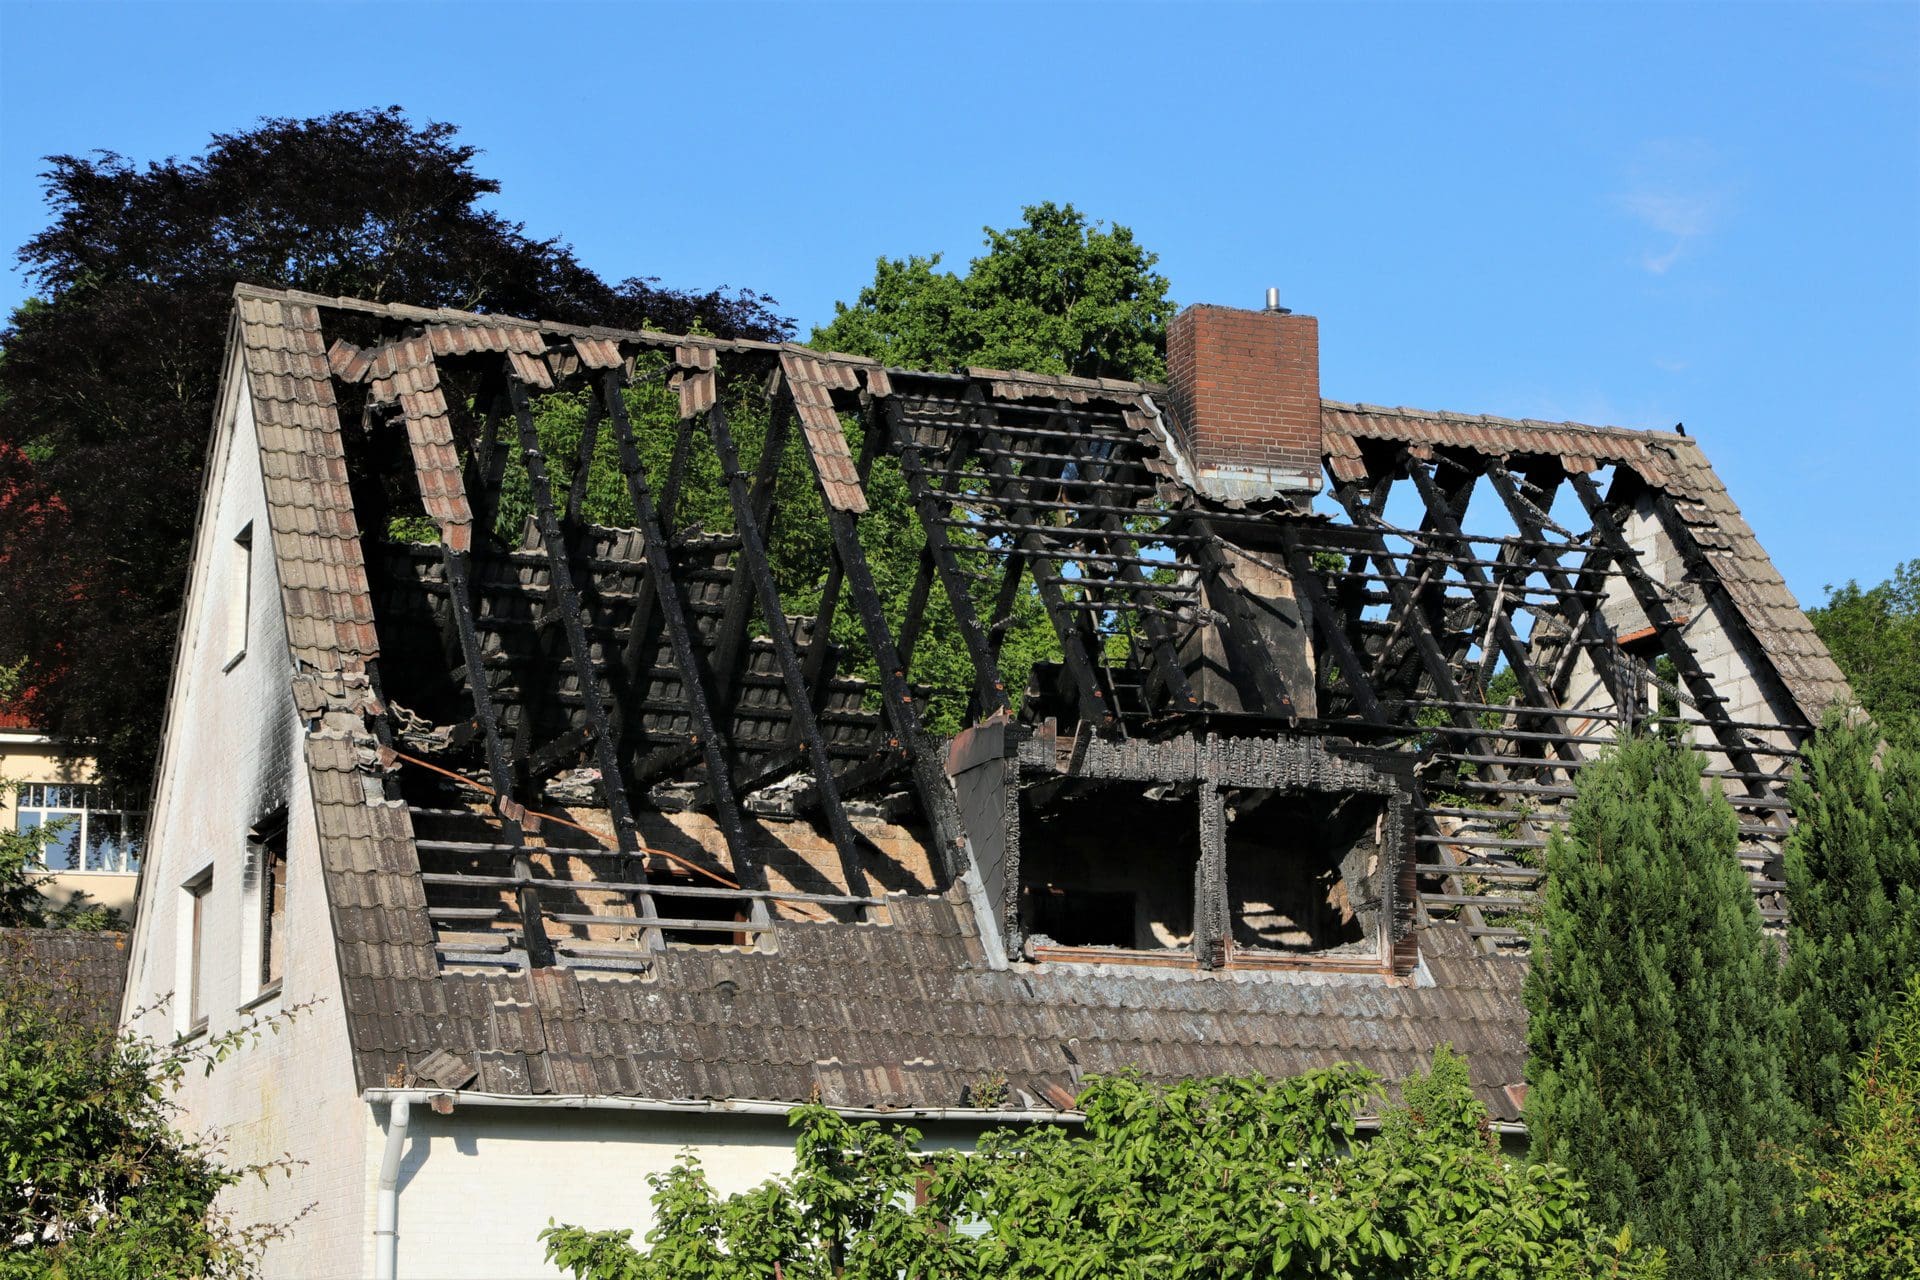 Dachstuhlbrand | Lässt sich dieses Haus noch retten?! (© Lars Gieger / stock.adobe.com)